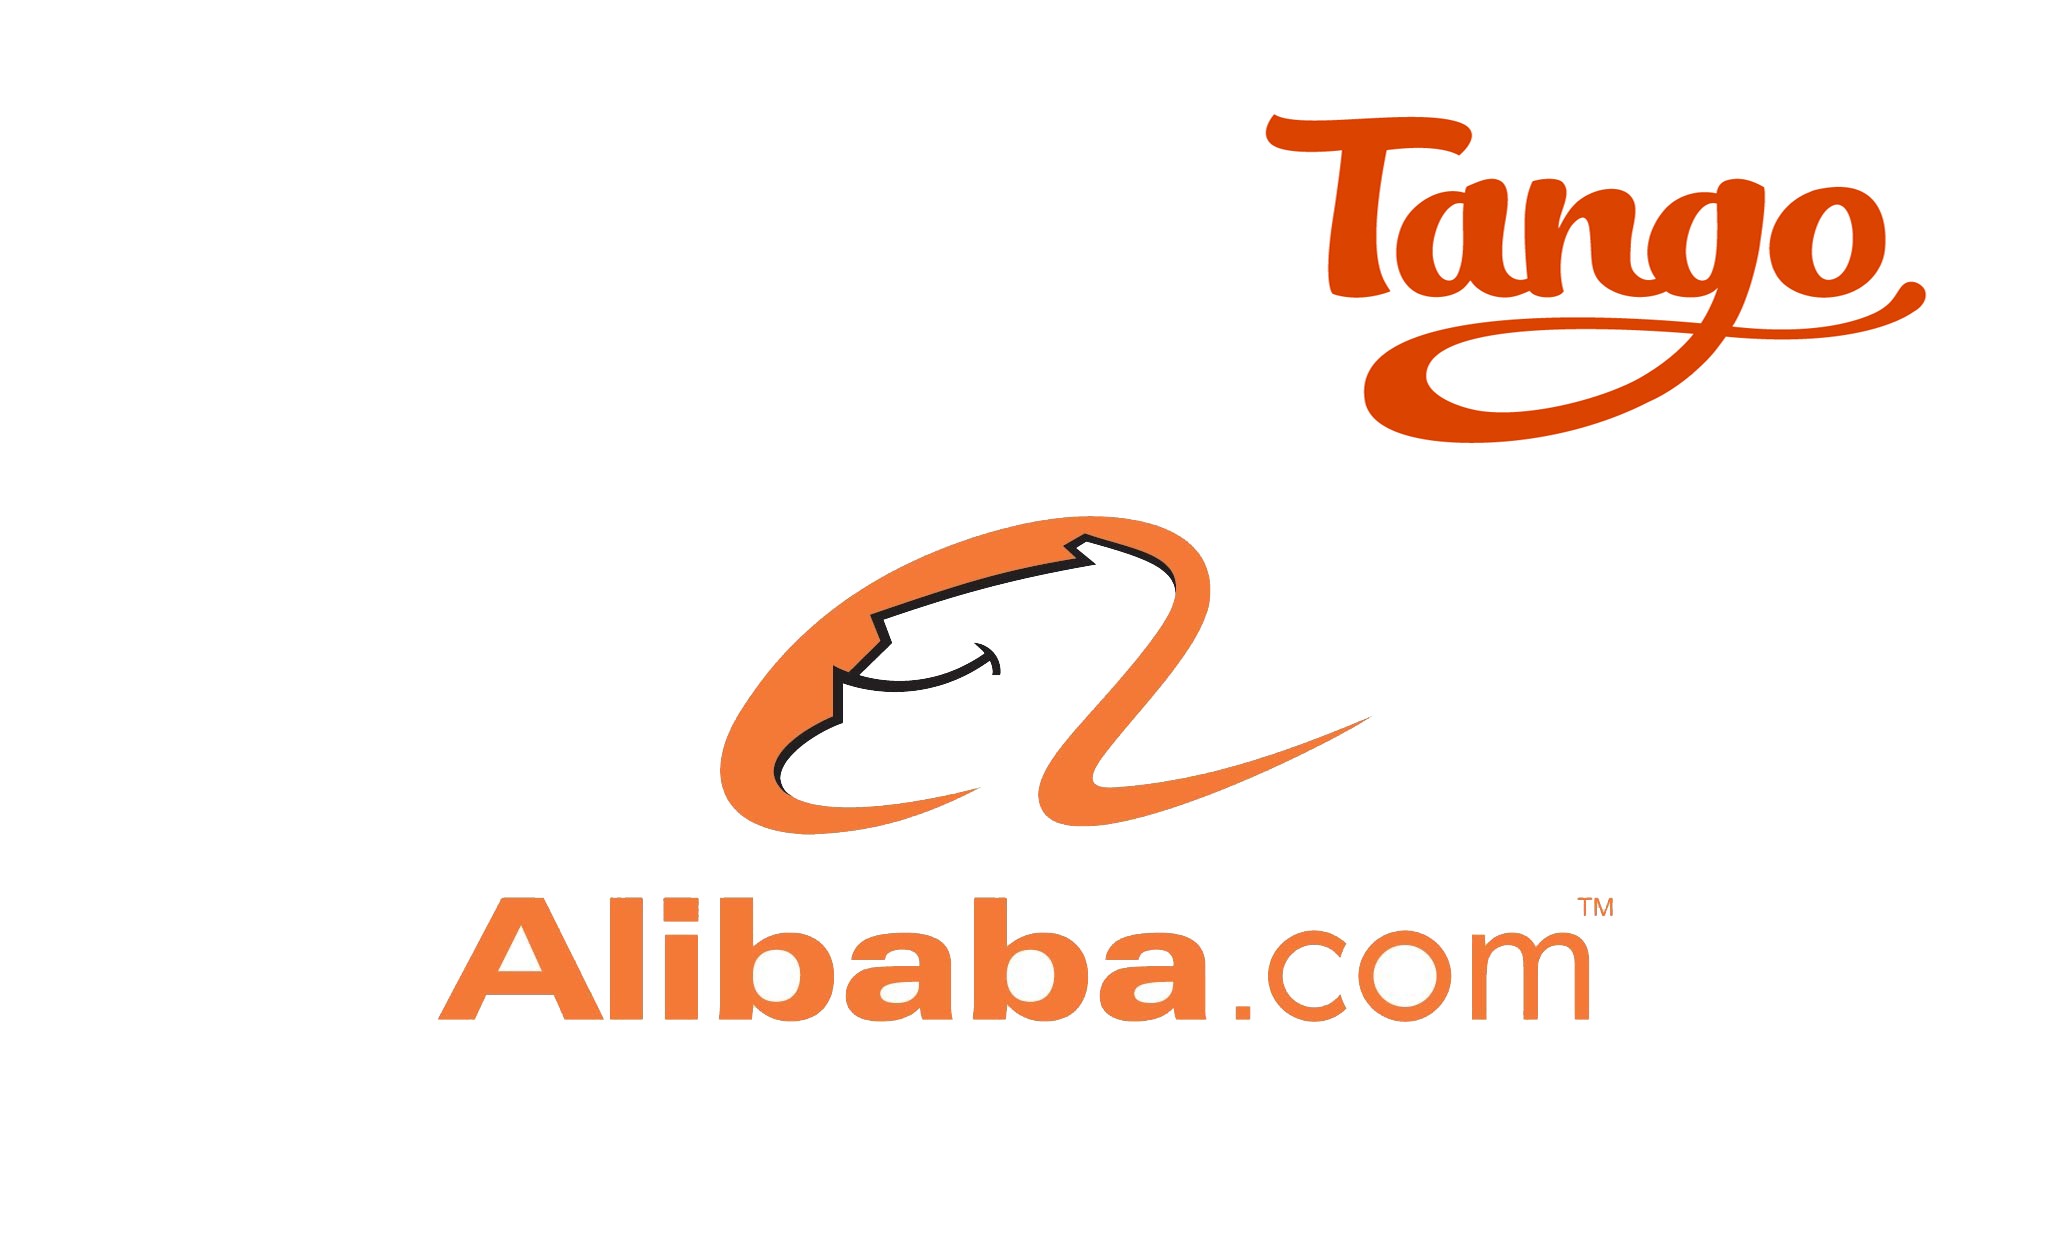 Tango Raised $280 million from Alibaba